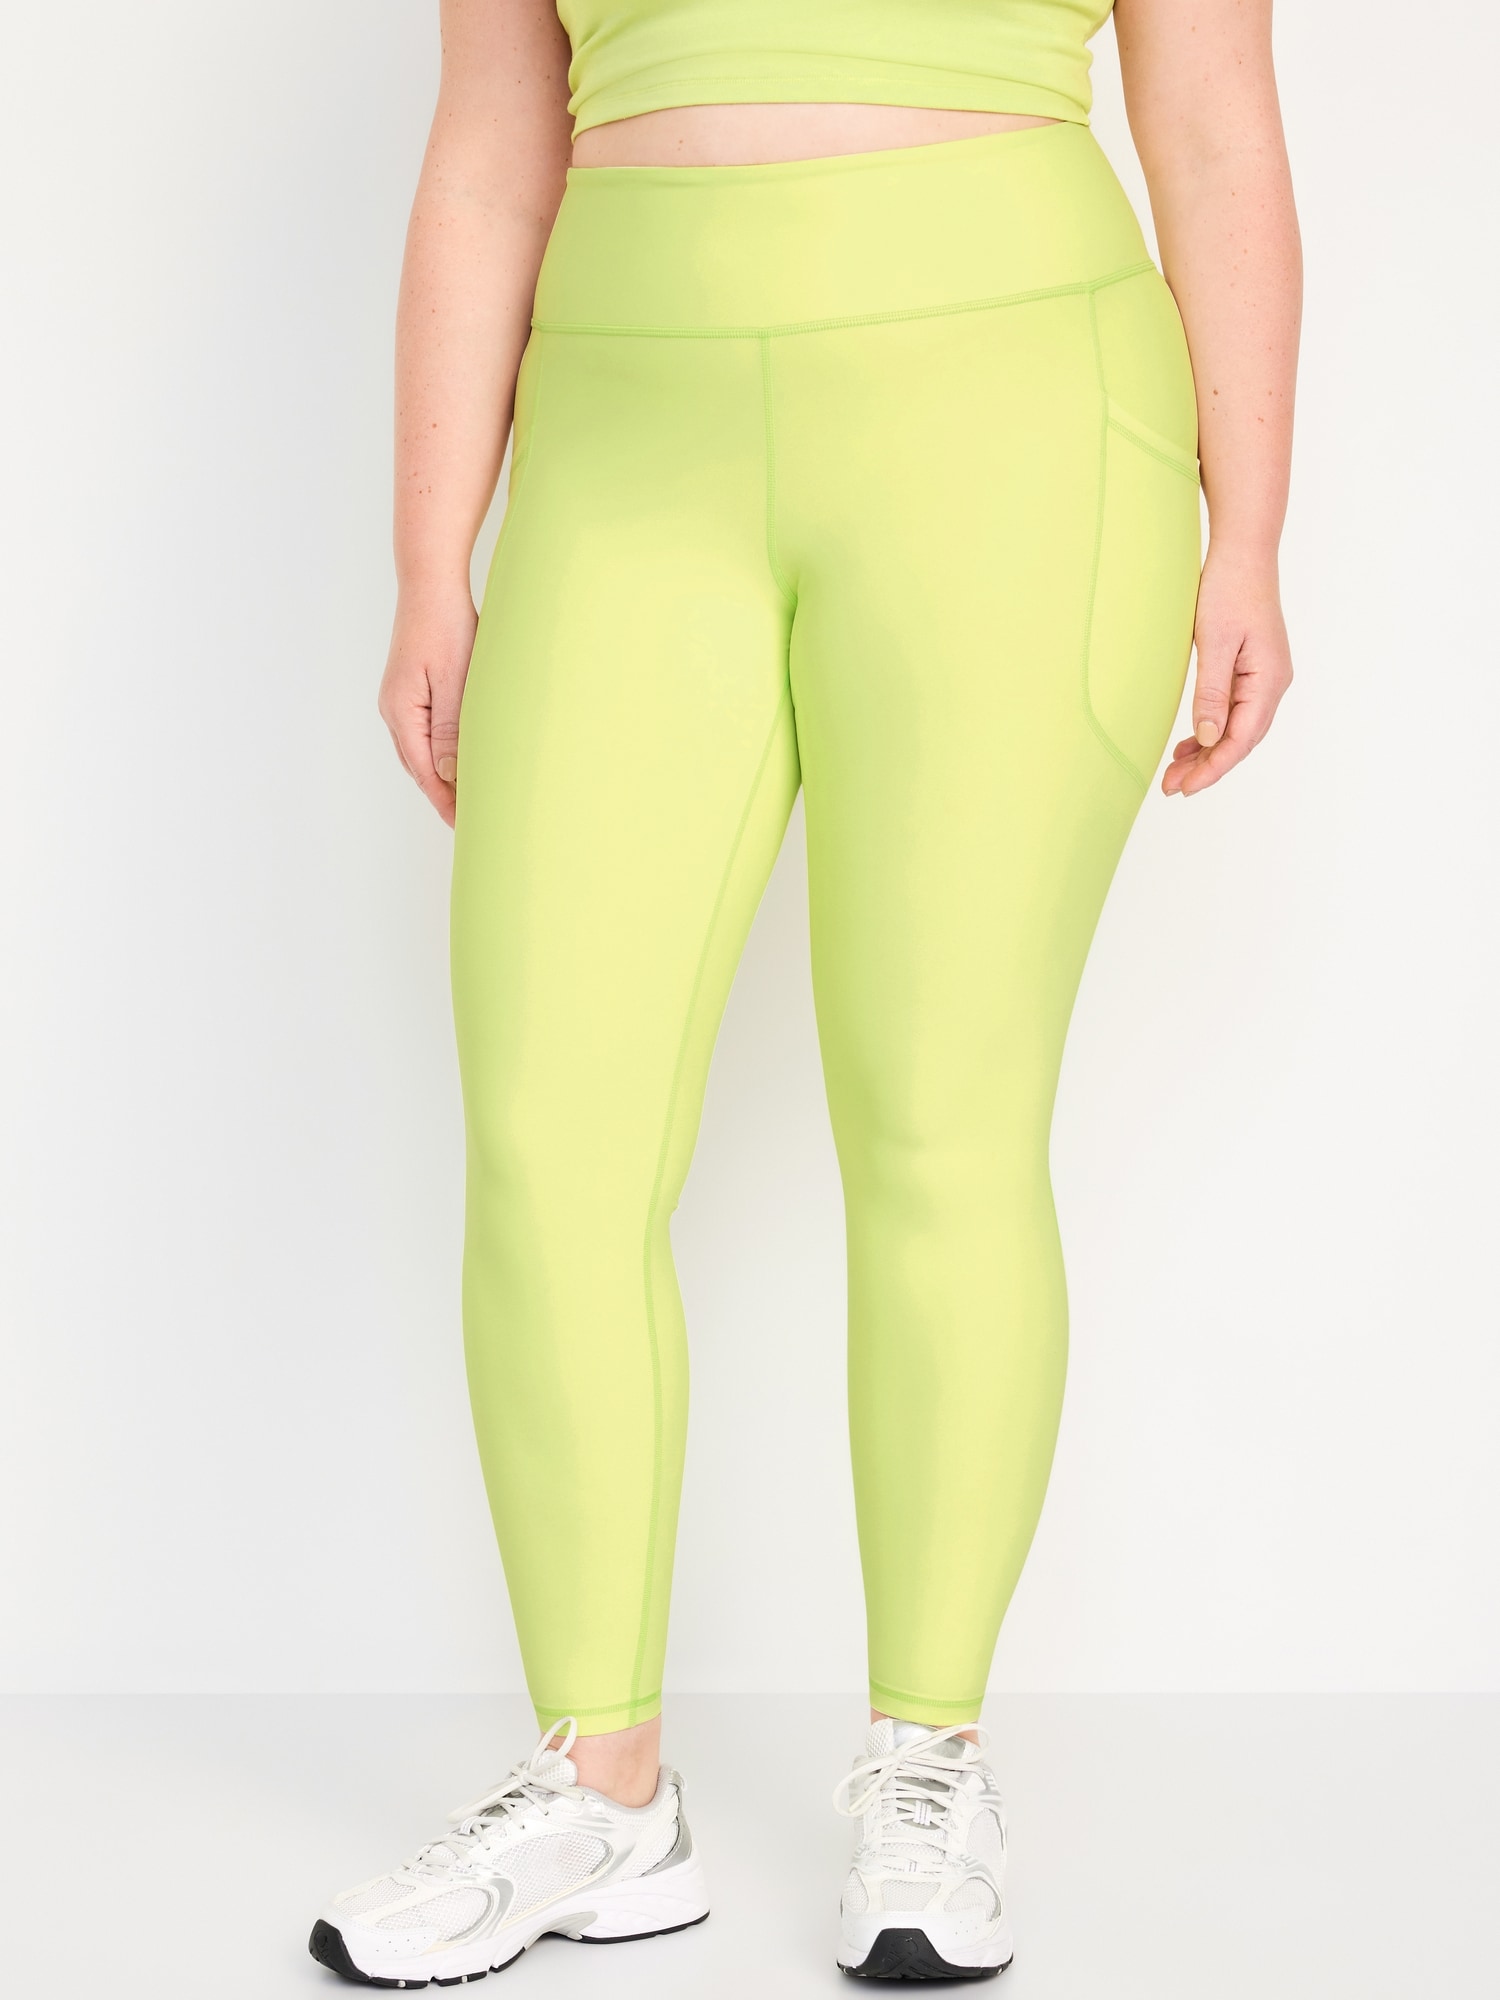 Aqua Turquoise Yoga Pants  Neon leggings, Yoga wear women, Plus